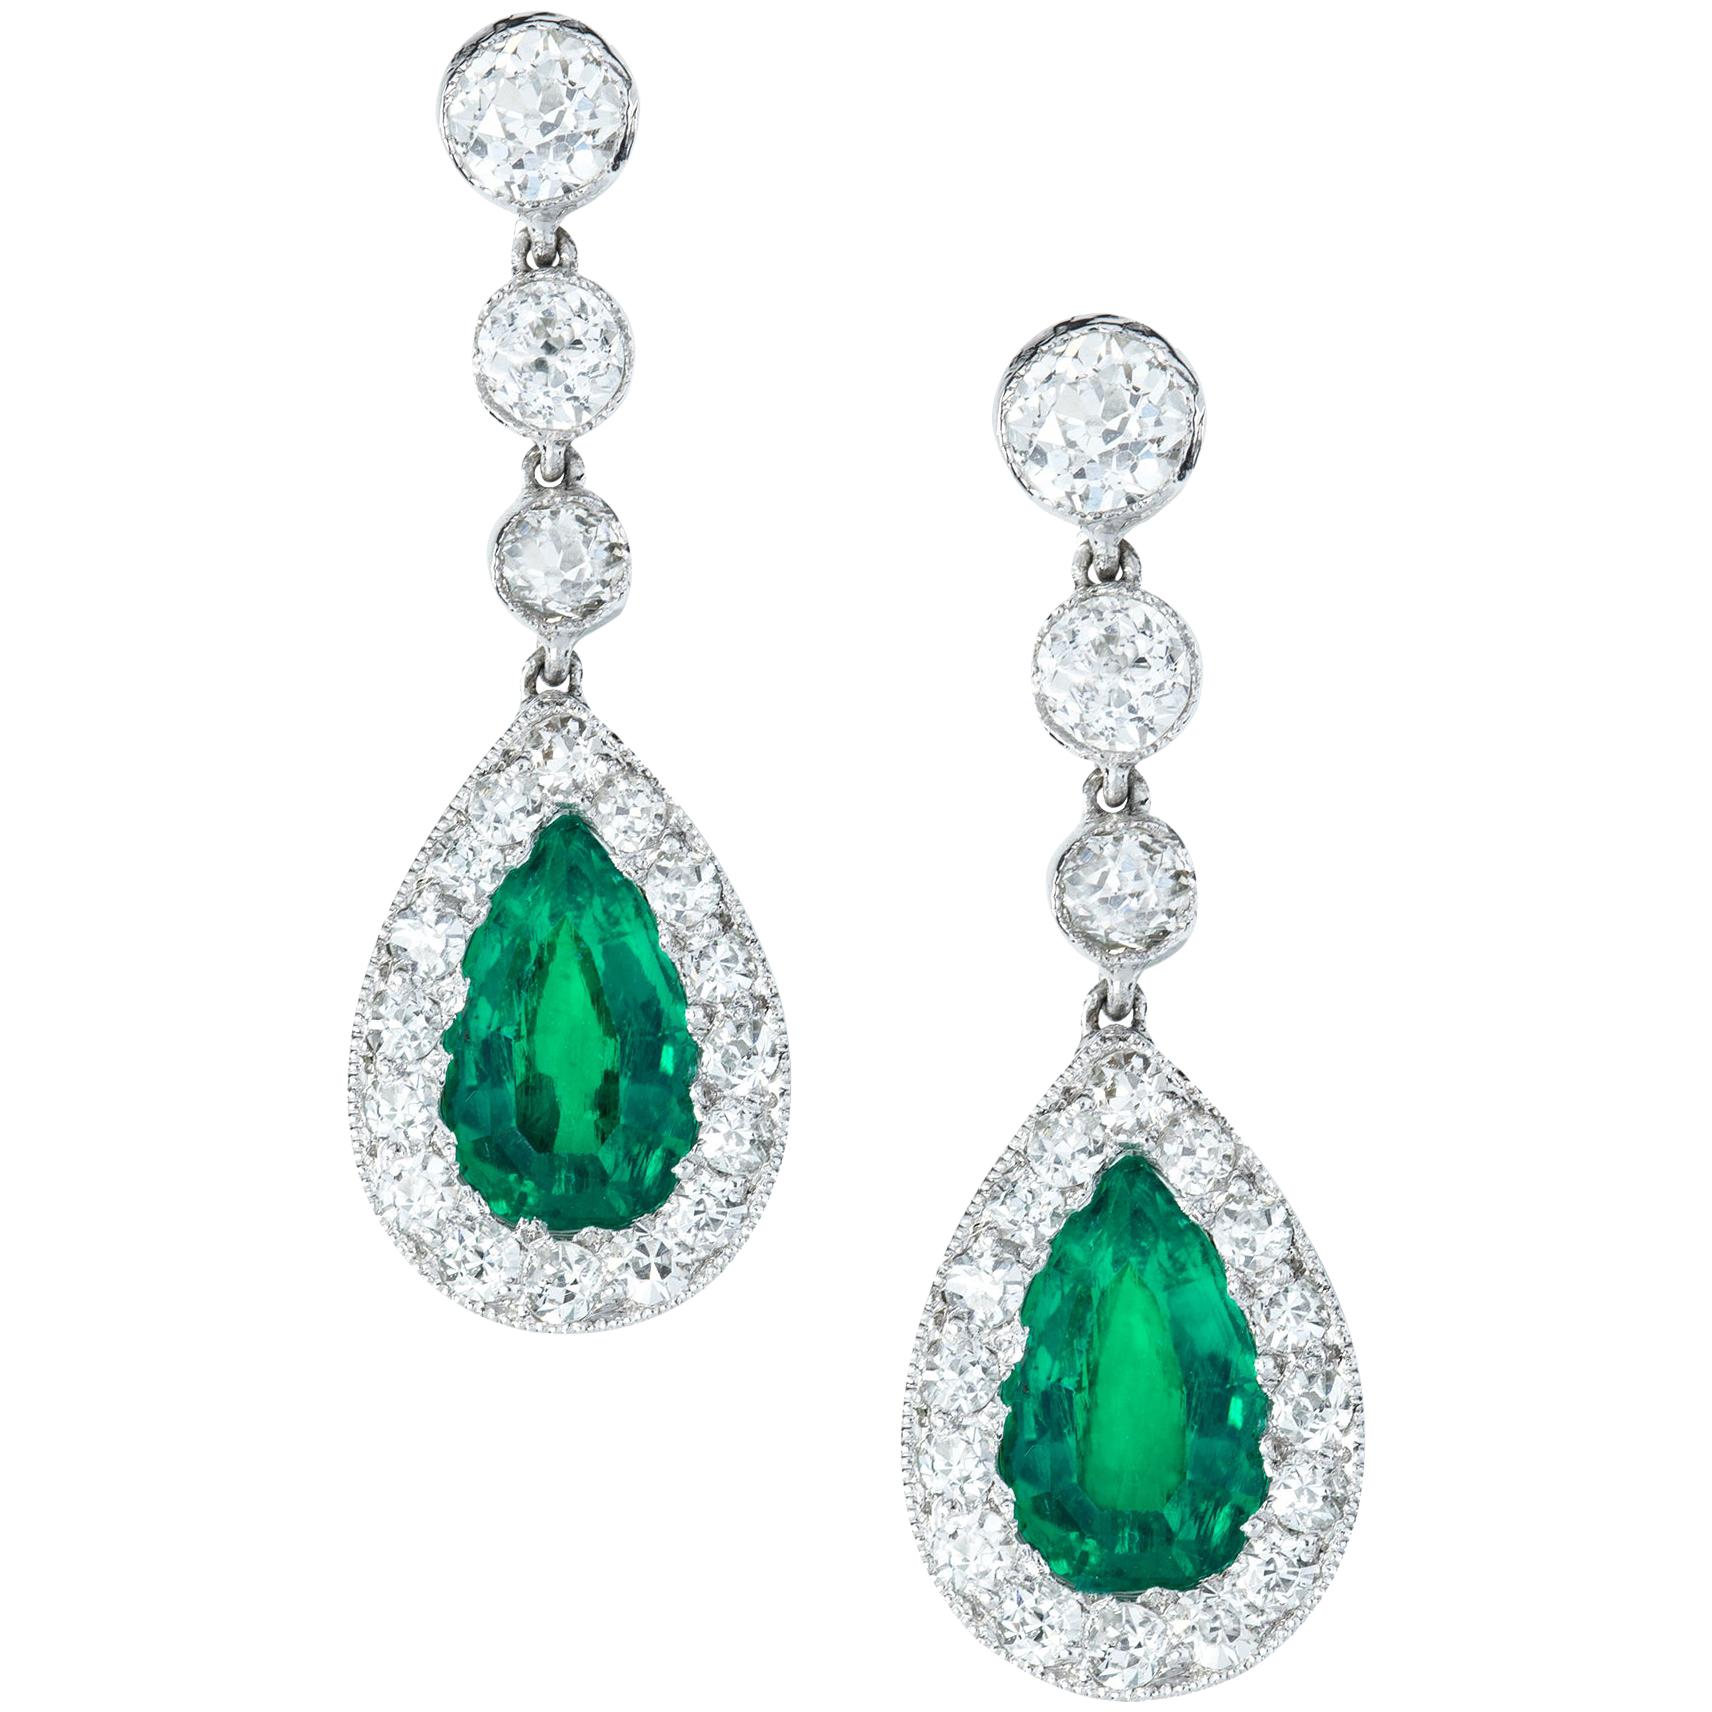 Pair of Emerald and Diamond Drop Earrings